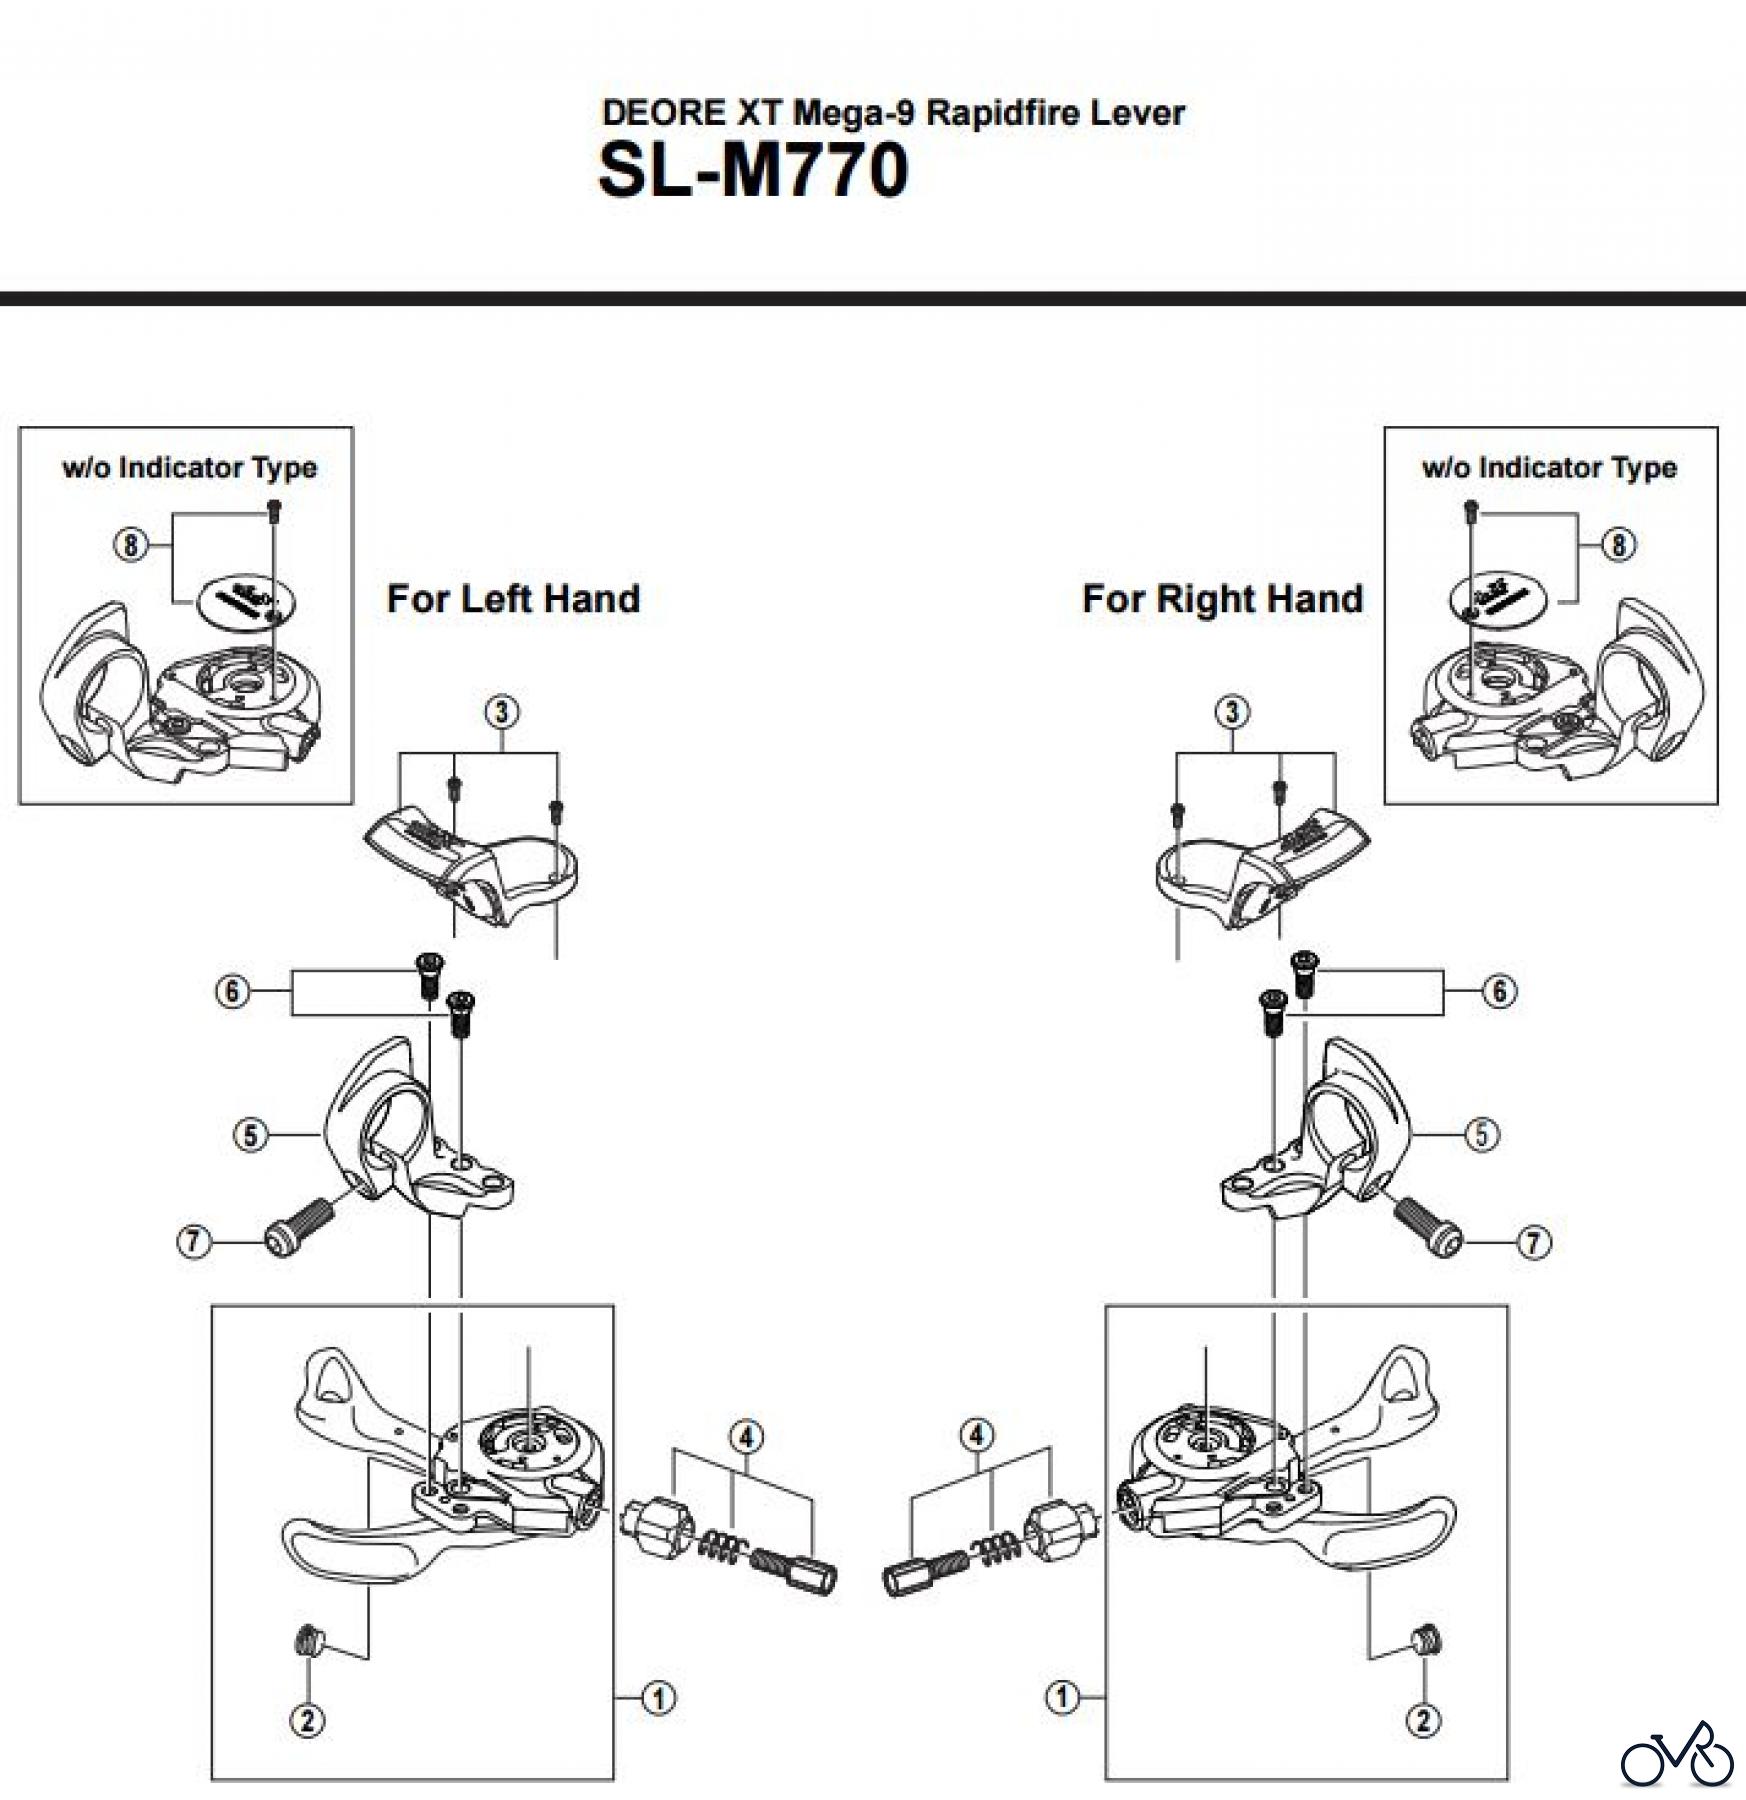  Shimano SL Shift Lever - Schalthebel SL-M770-2708A DEORE XT Mega-9 Rapidfire Lever